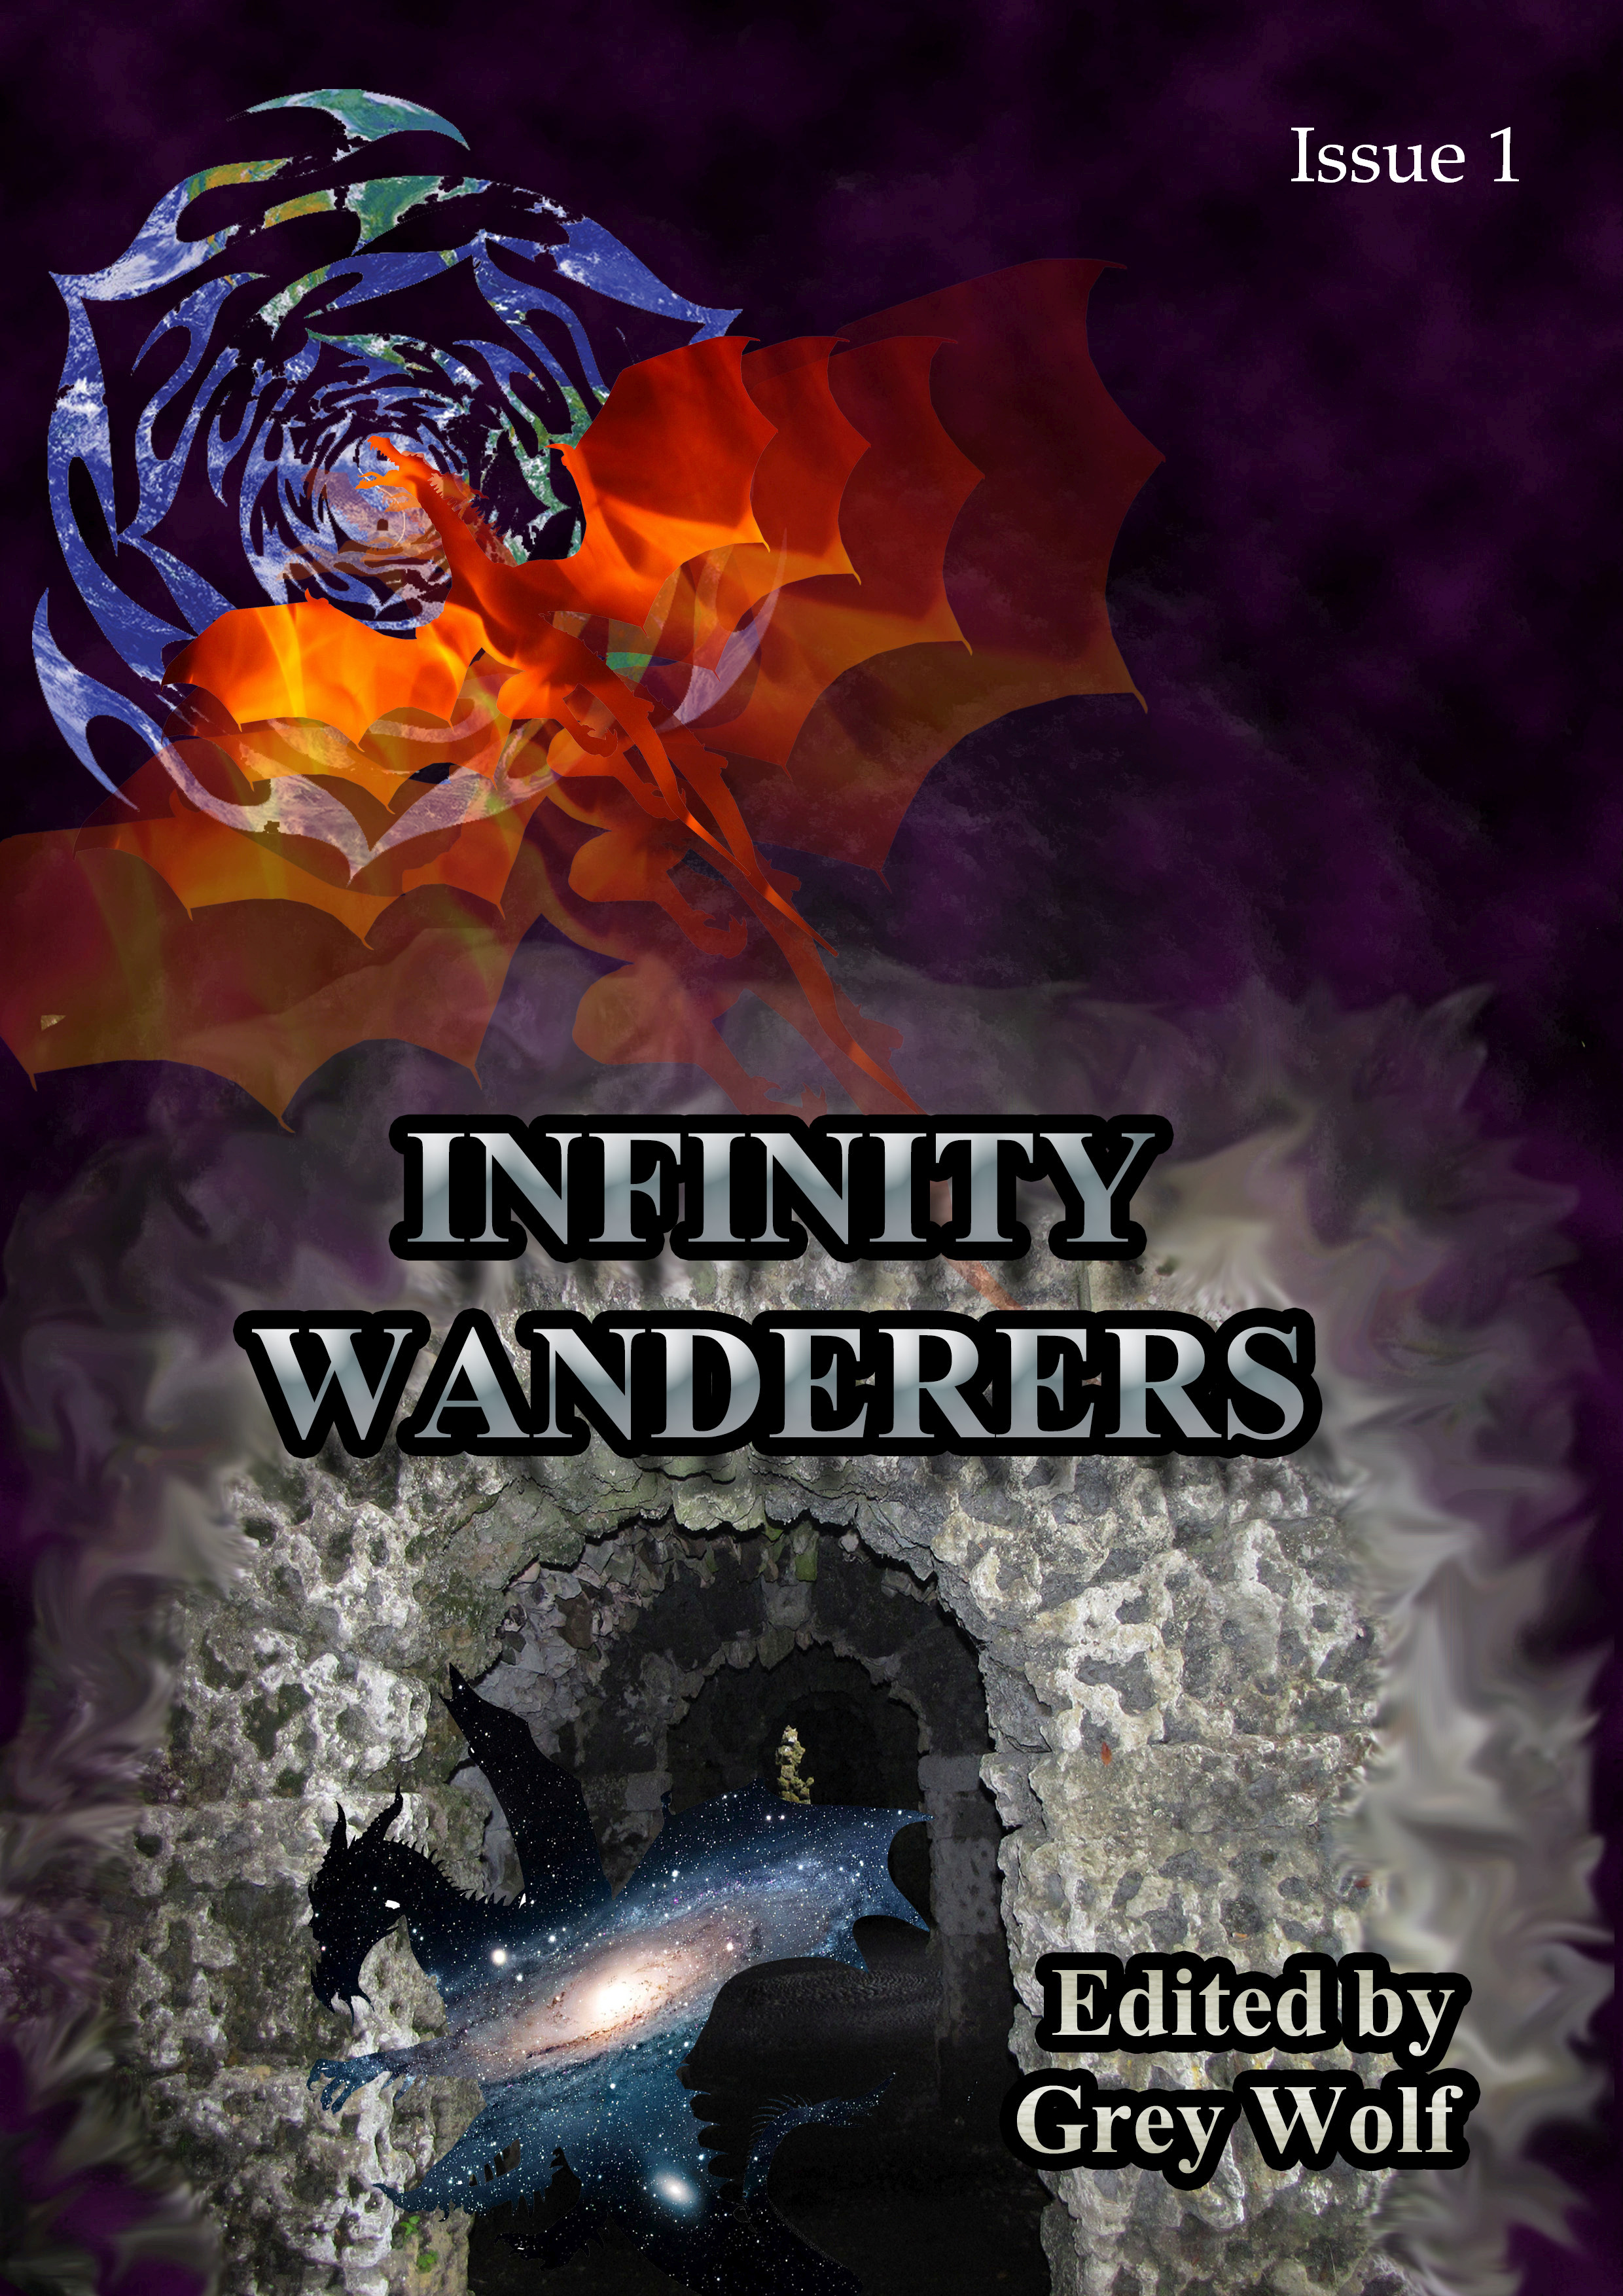 Issue 1 of Infinity Wanderers magazine